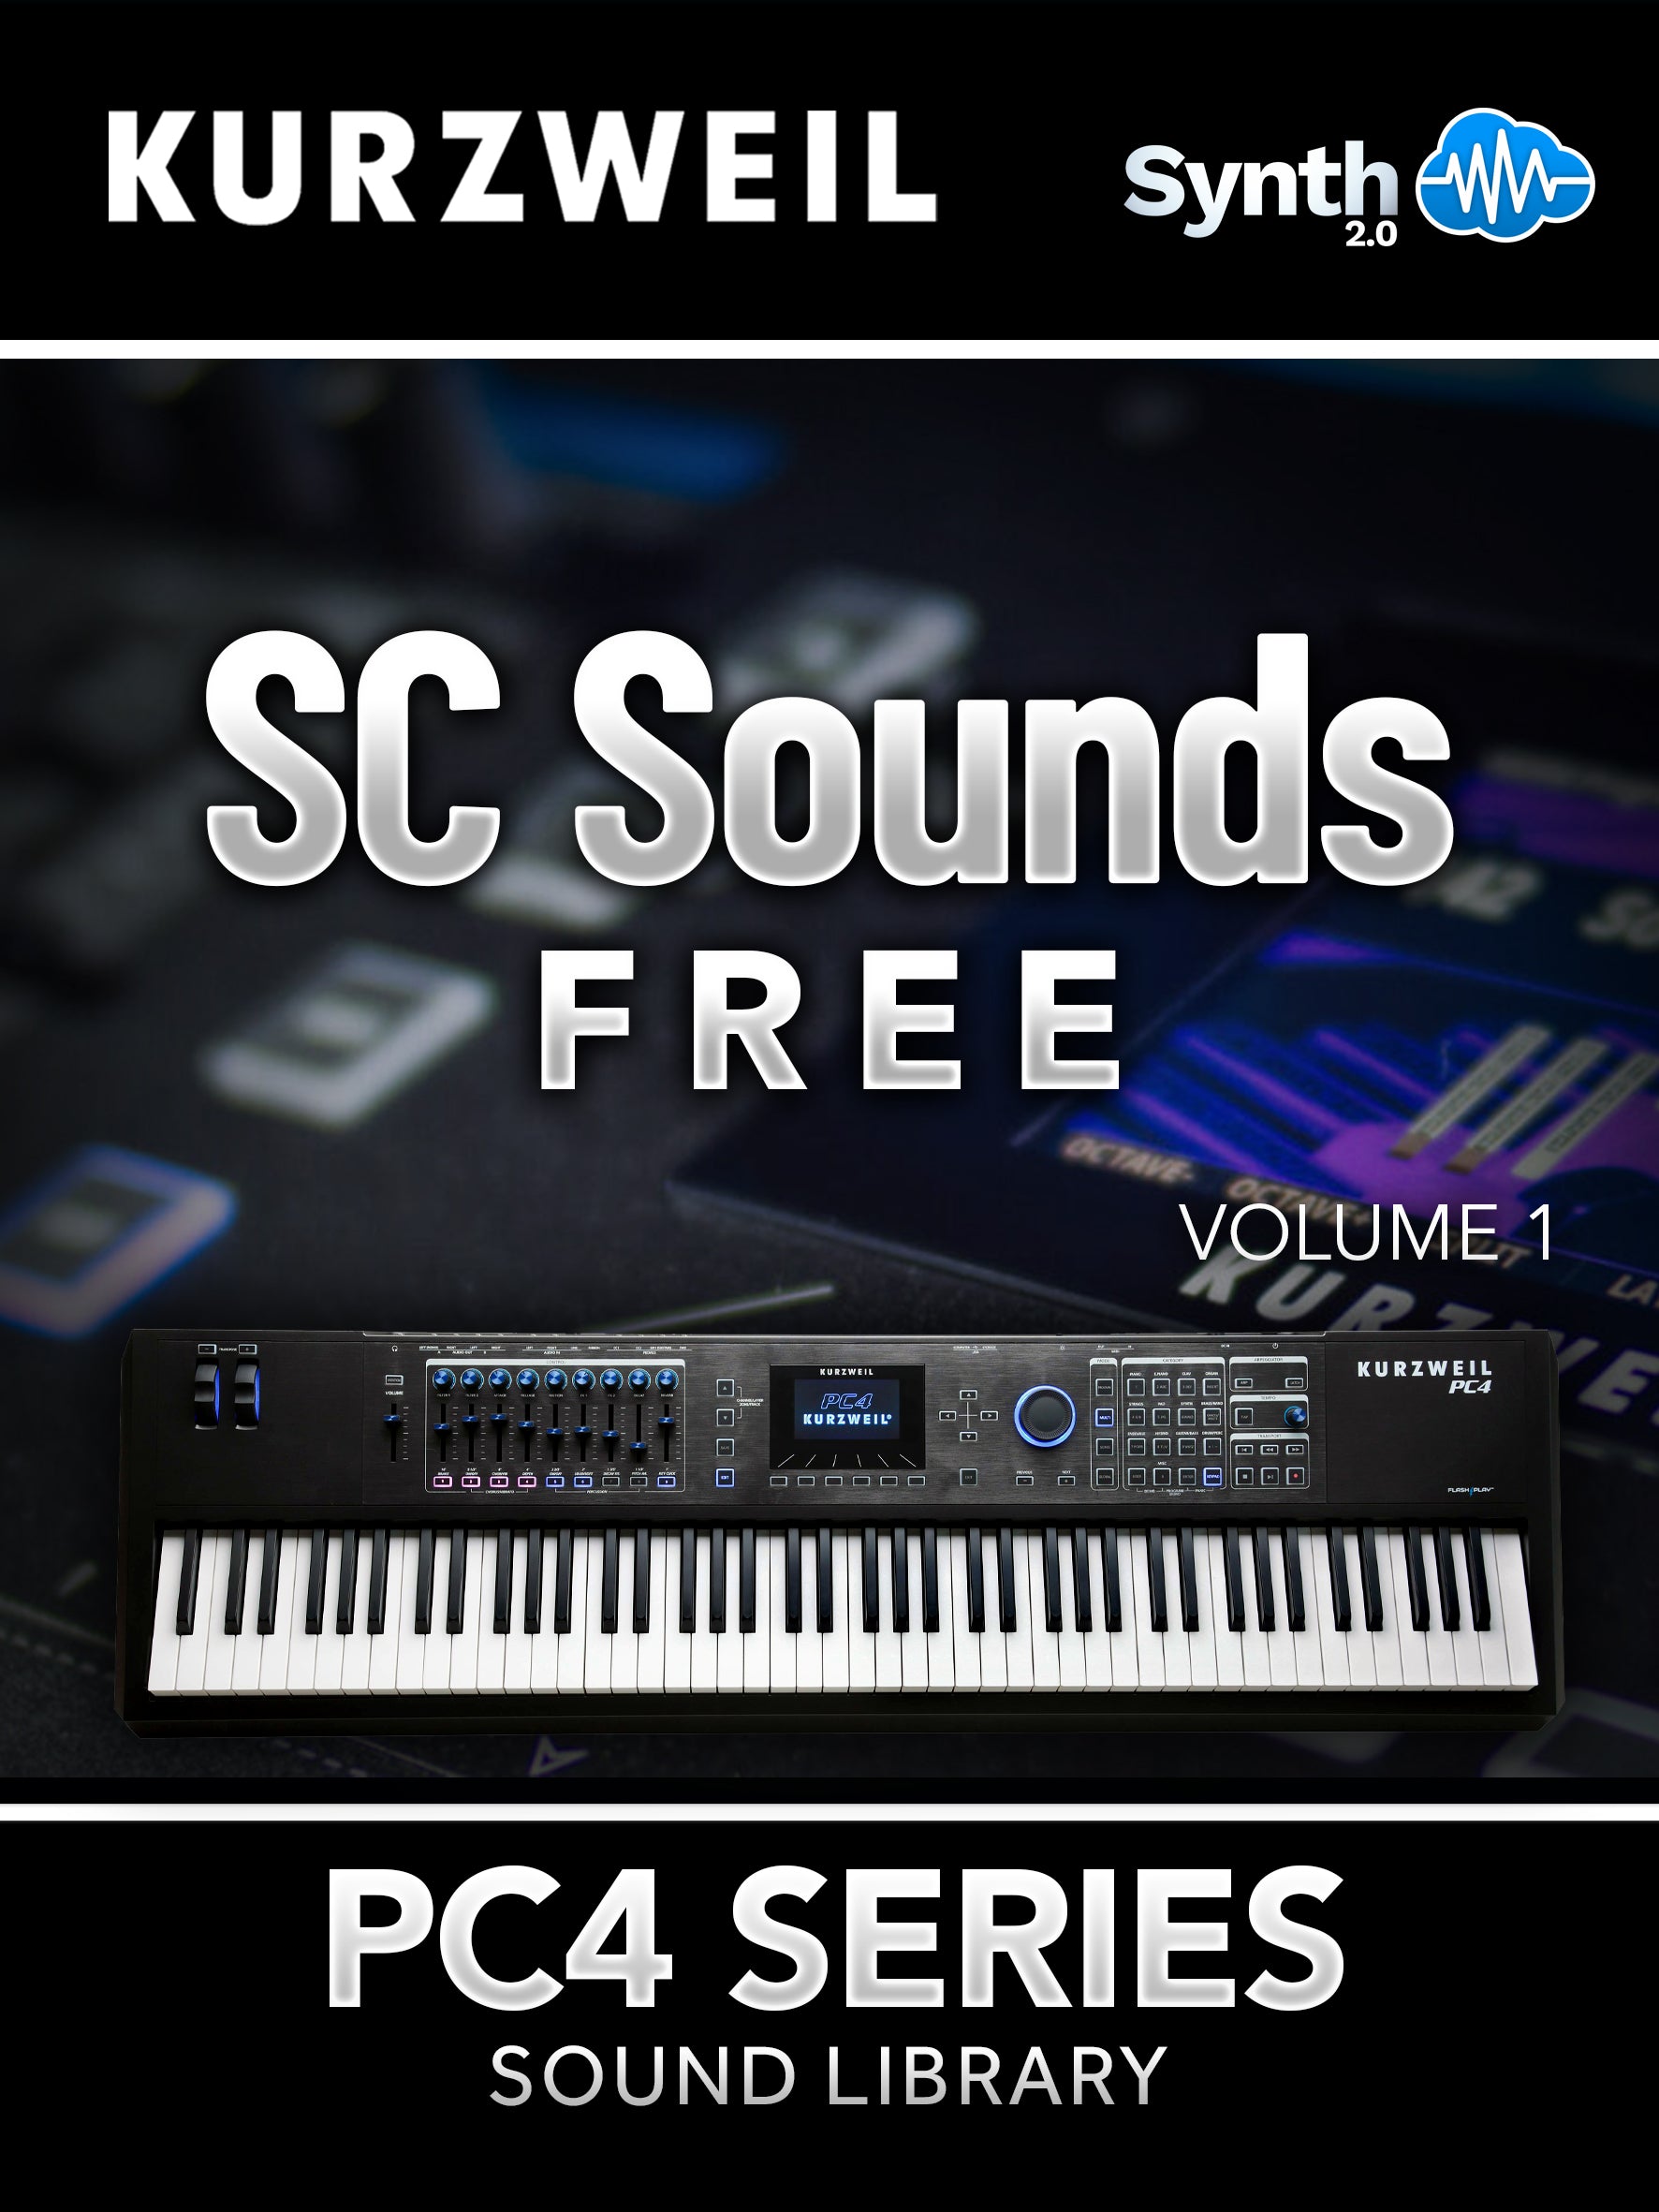 PC4022 - SC Sounds Free Vol.1 - Kurzweil PC4 Series ( 10 presets )